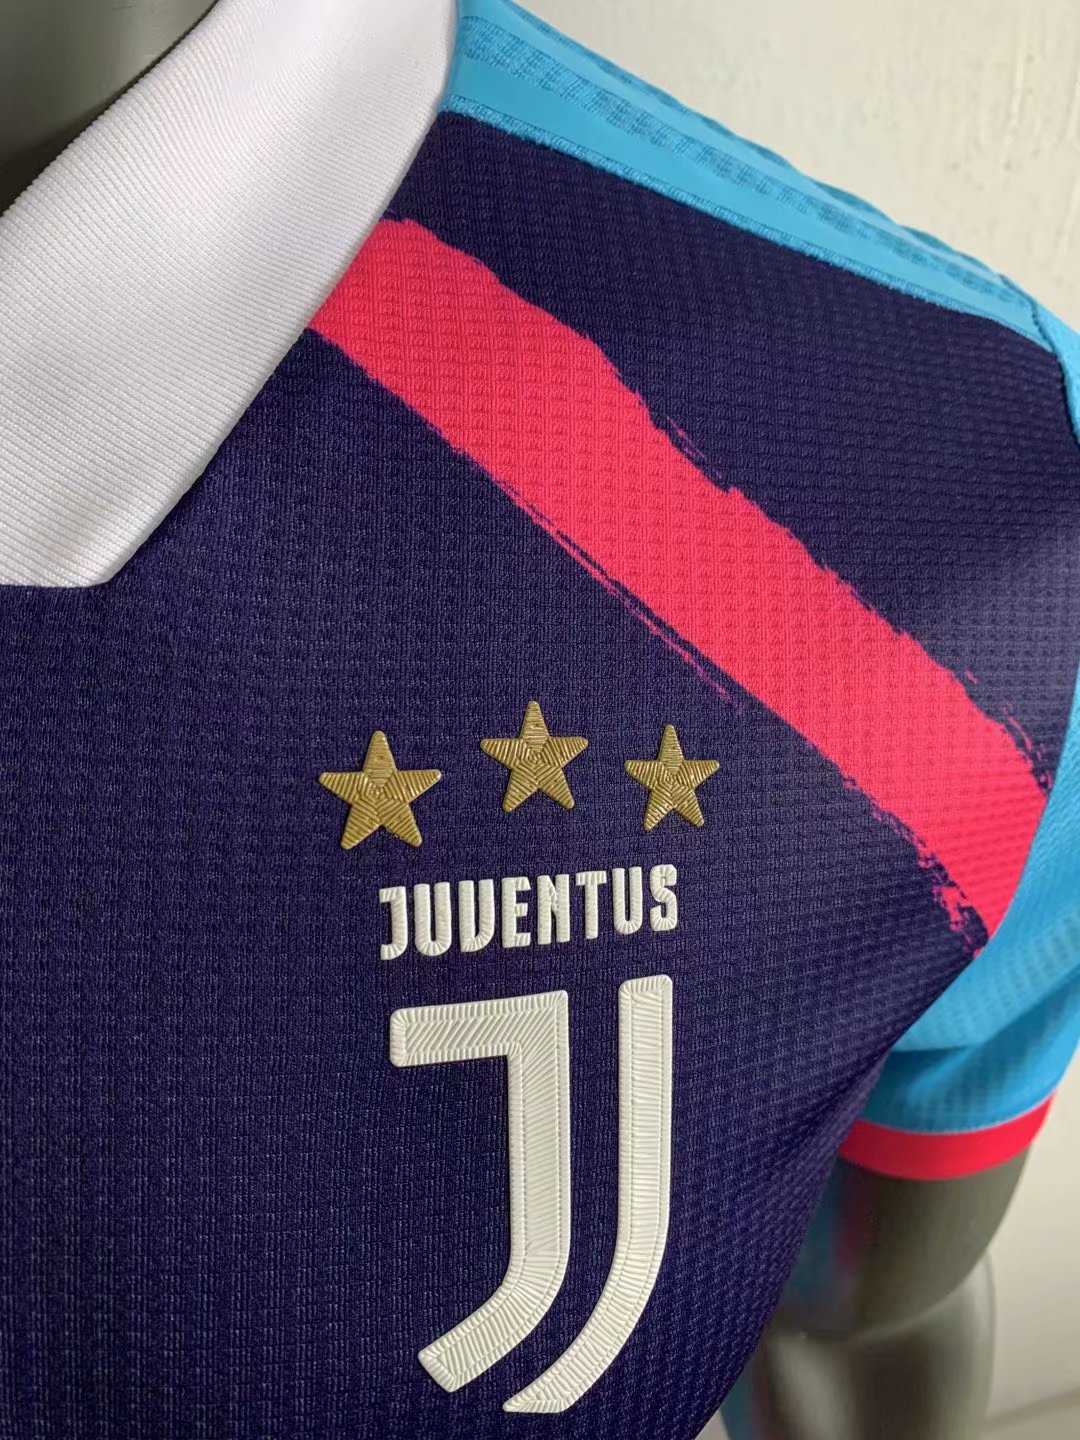 Match # 20-21 Juventus Special Edition Man Soccer Football Kit